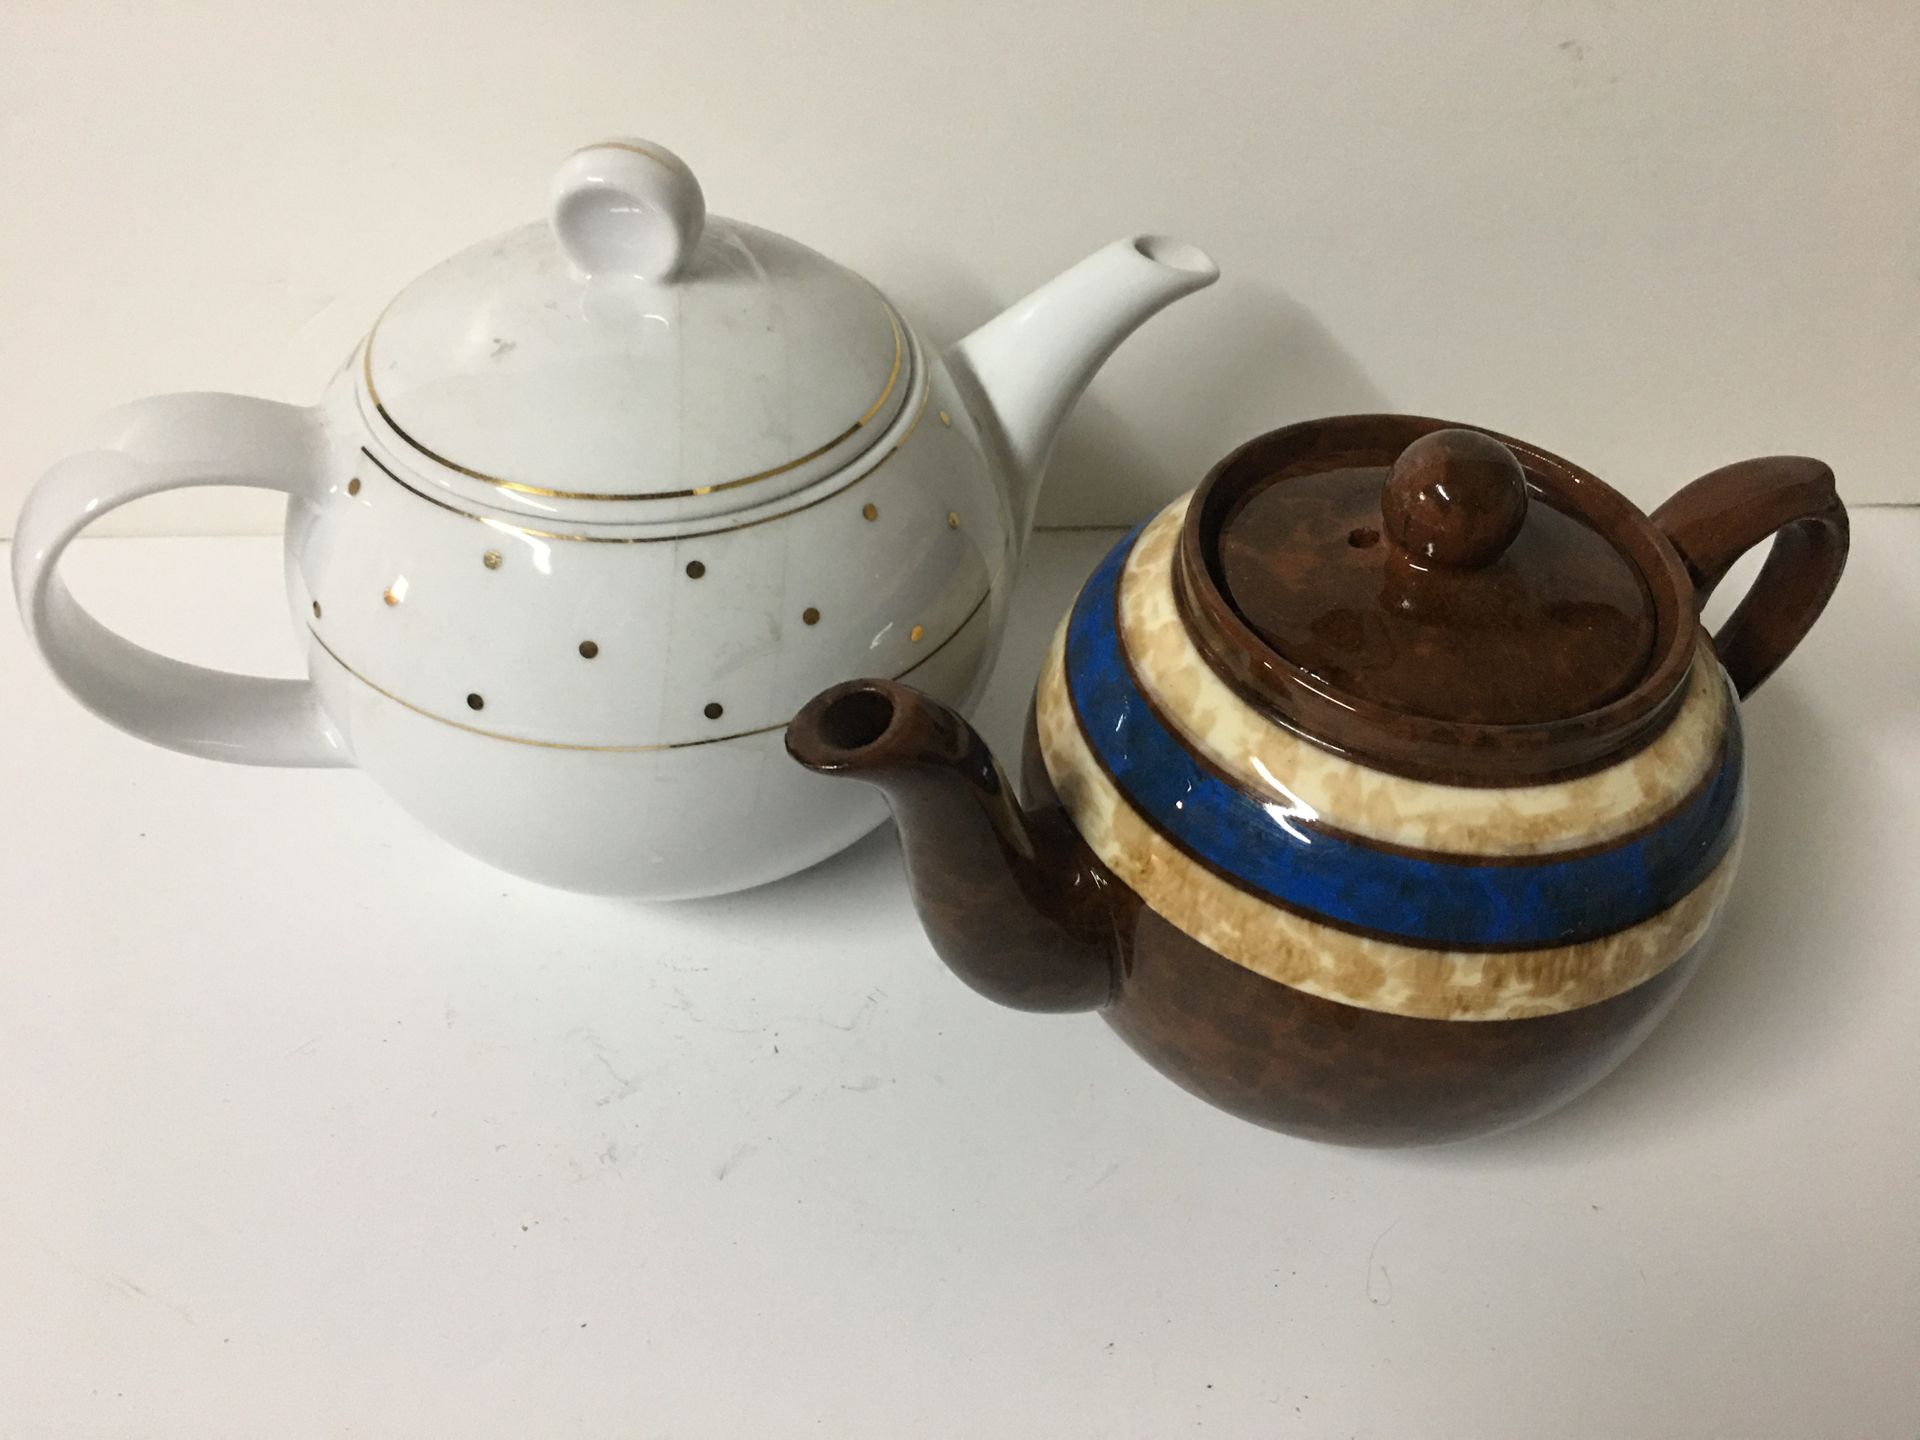 Null 两个茶壶，一个是白色利摩日瓷器（老佛爷百货公司），长23厘米，高15厘米，另一个是英国陶器亚瑟伍德，长21厘米，高13厘米。